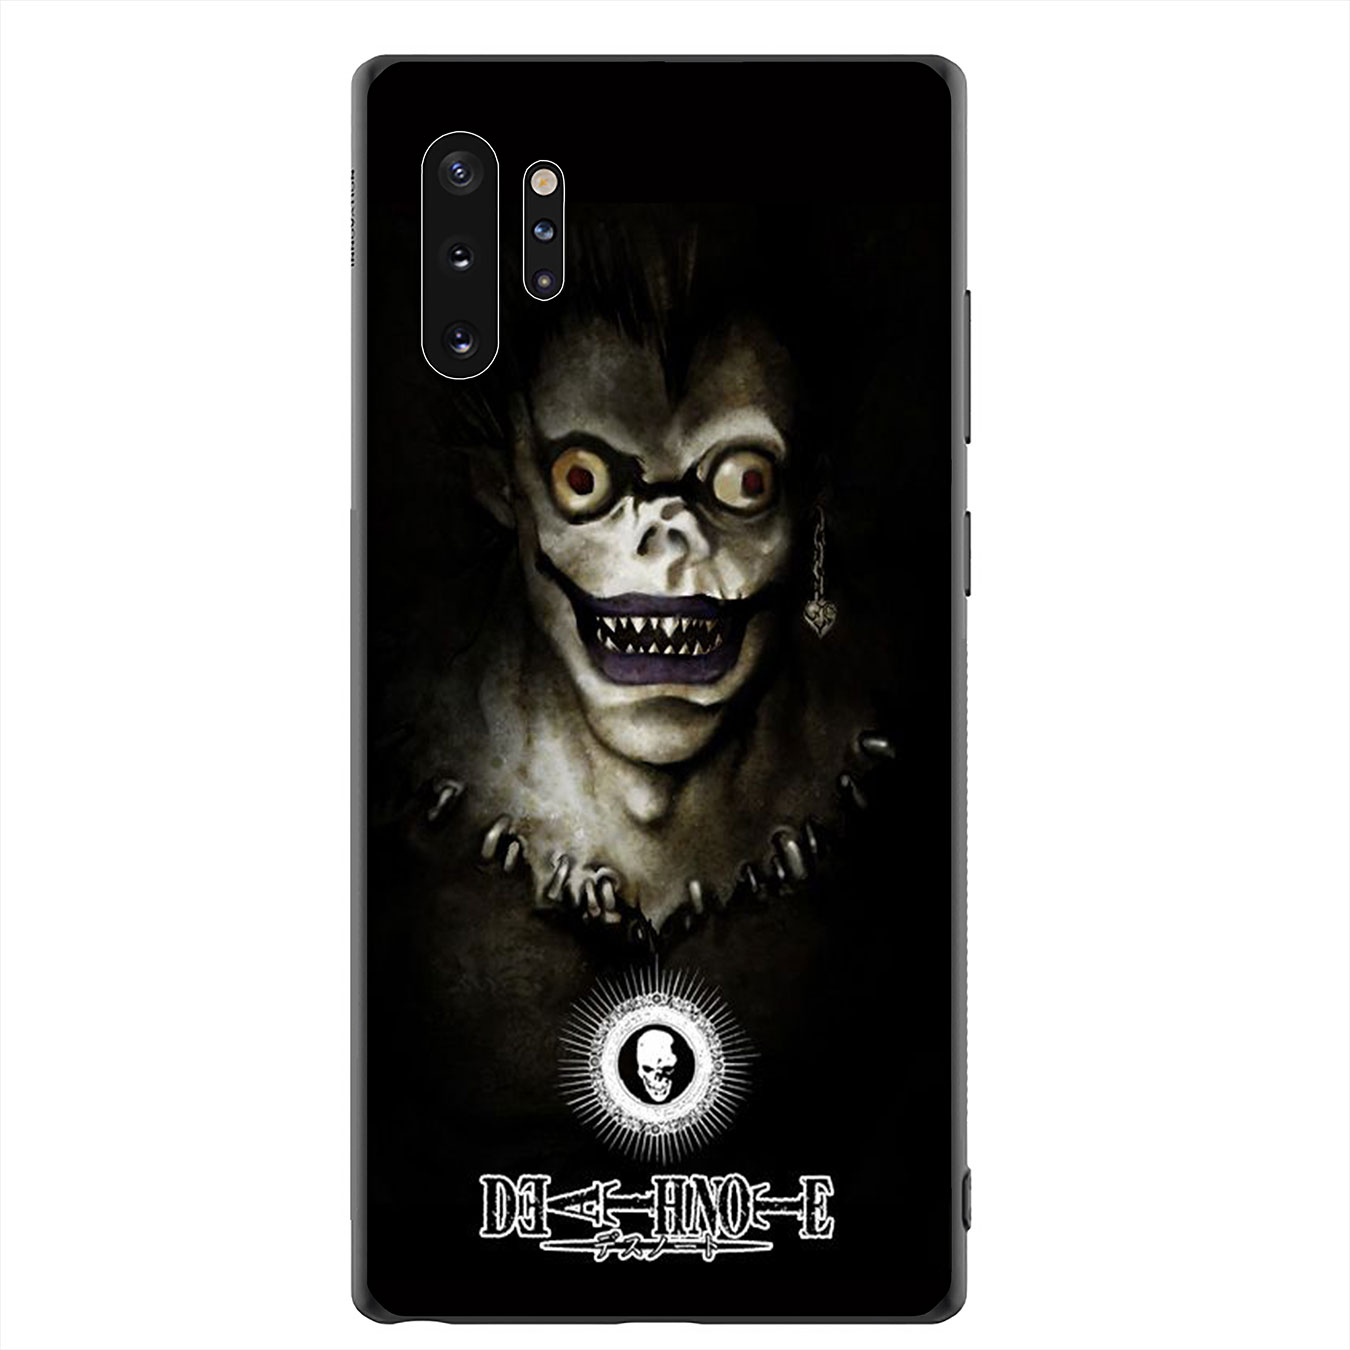 Samsung Galaxy A9 A8 A7 A6 Plus J8 2018 + A21S A70 M20 A6+ A8+ 6Plus Phone Case Soft Silicone Casing Death Note Ryuk kira